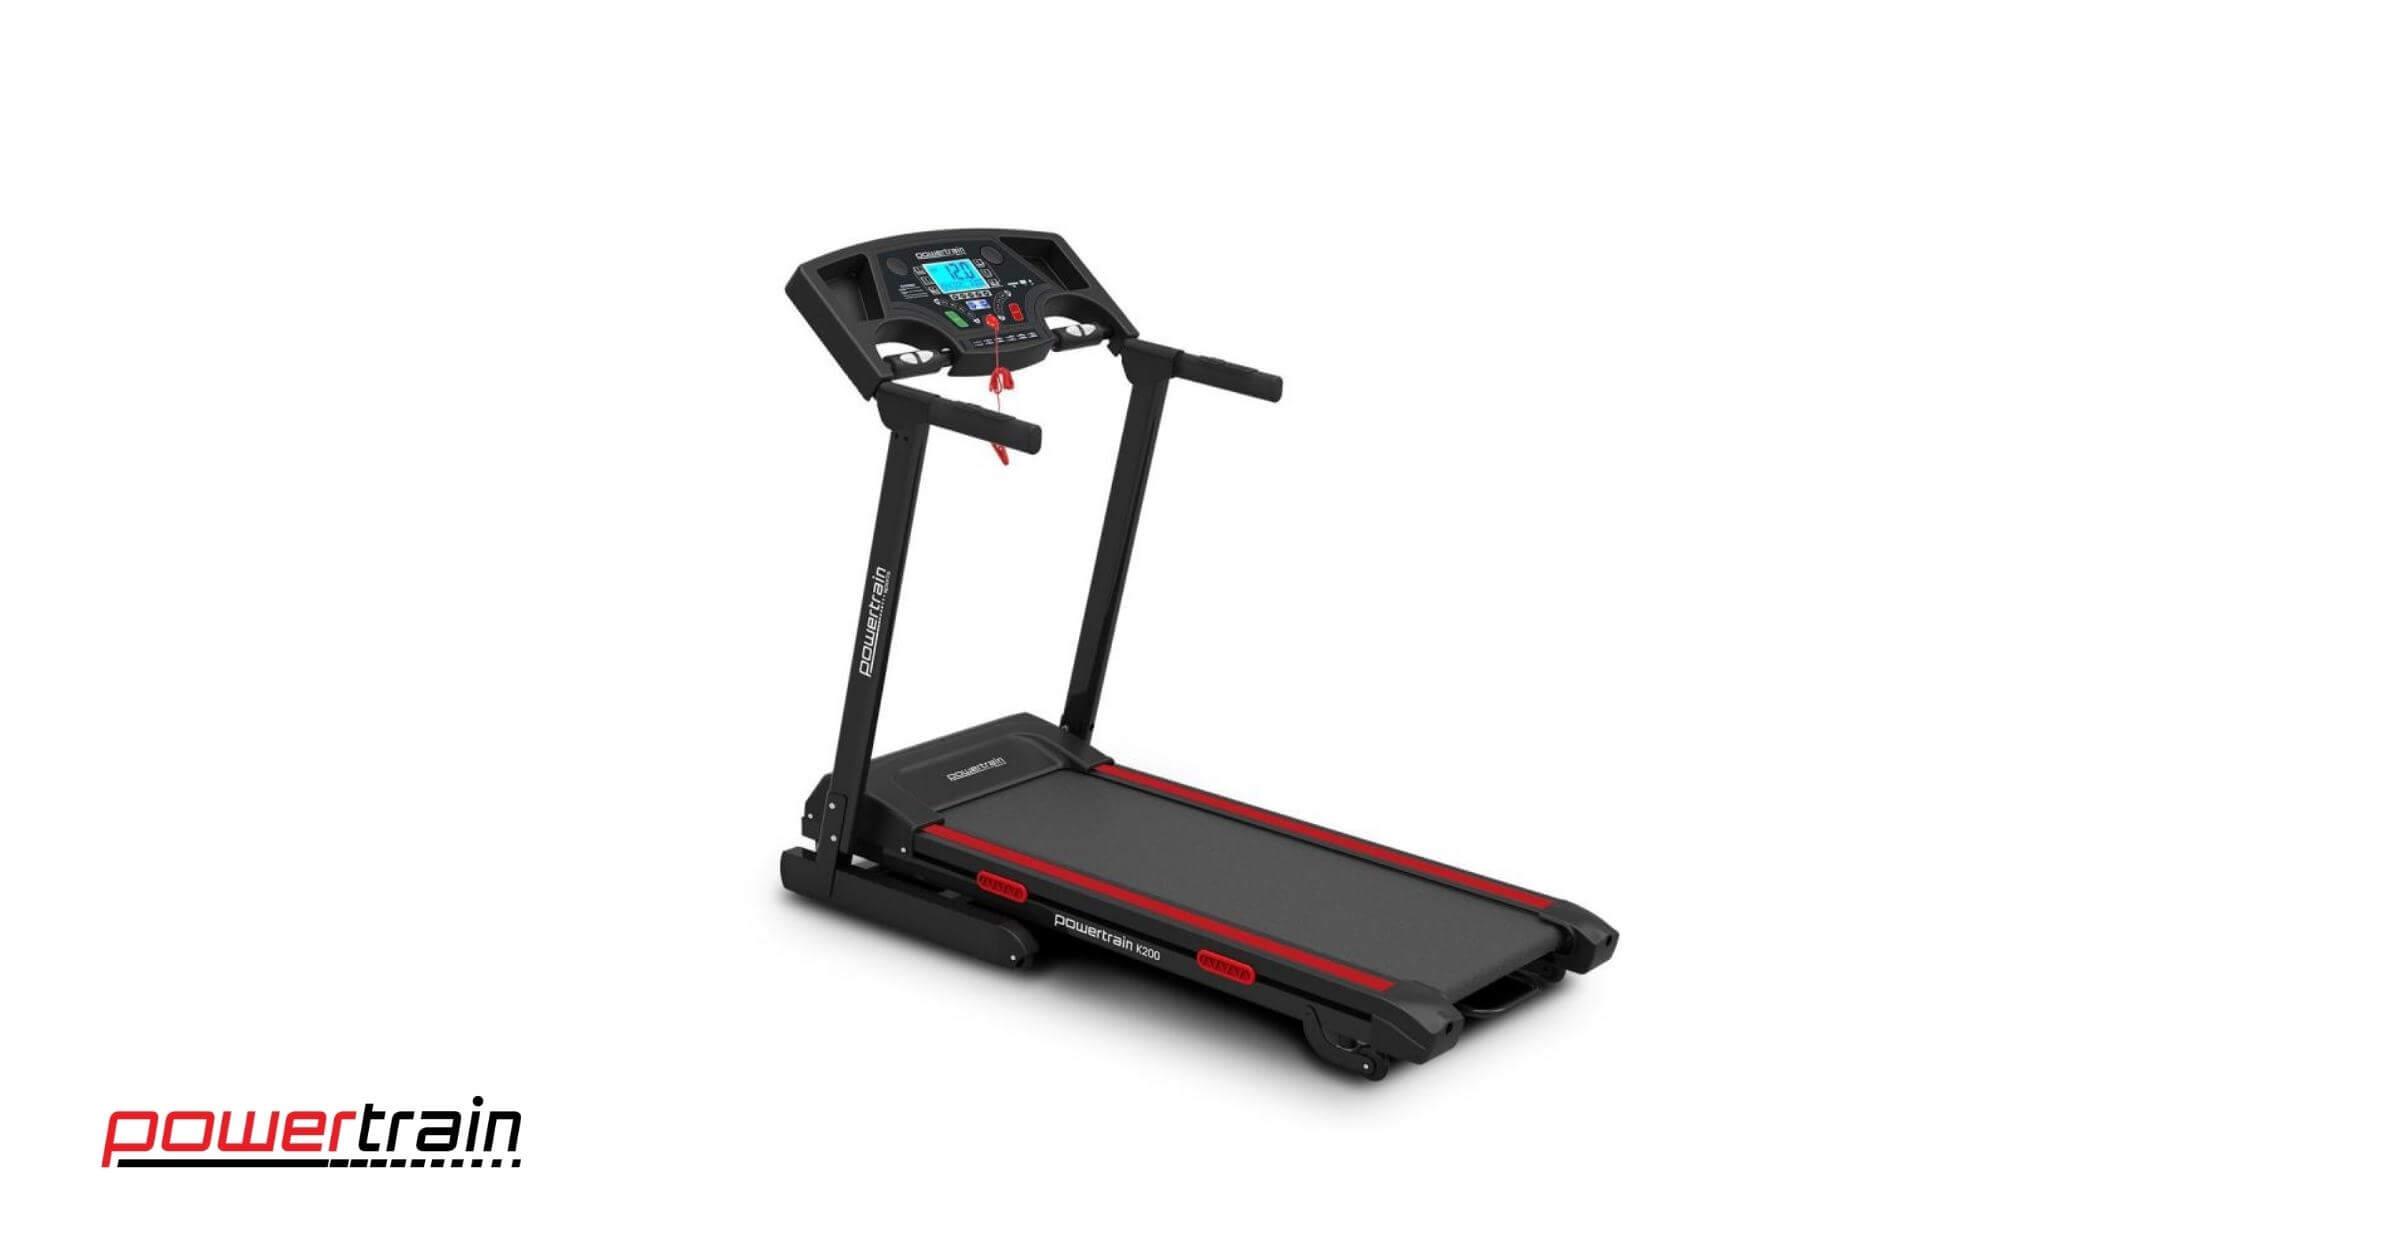 Powertrain K200 Treadmill